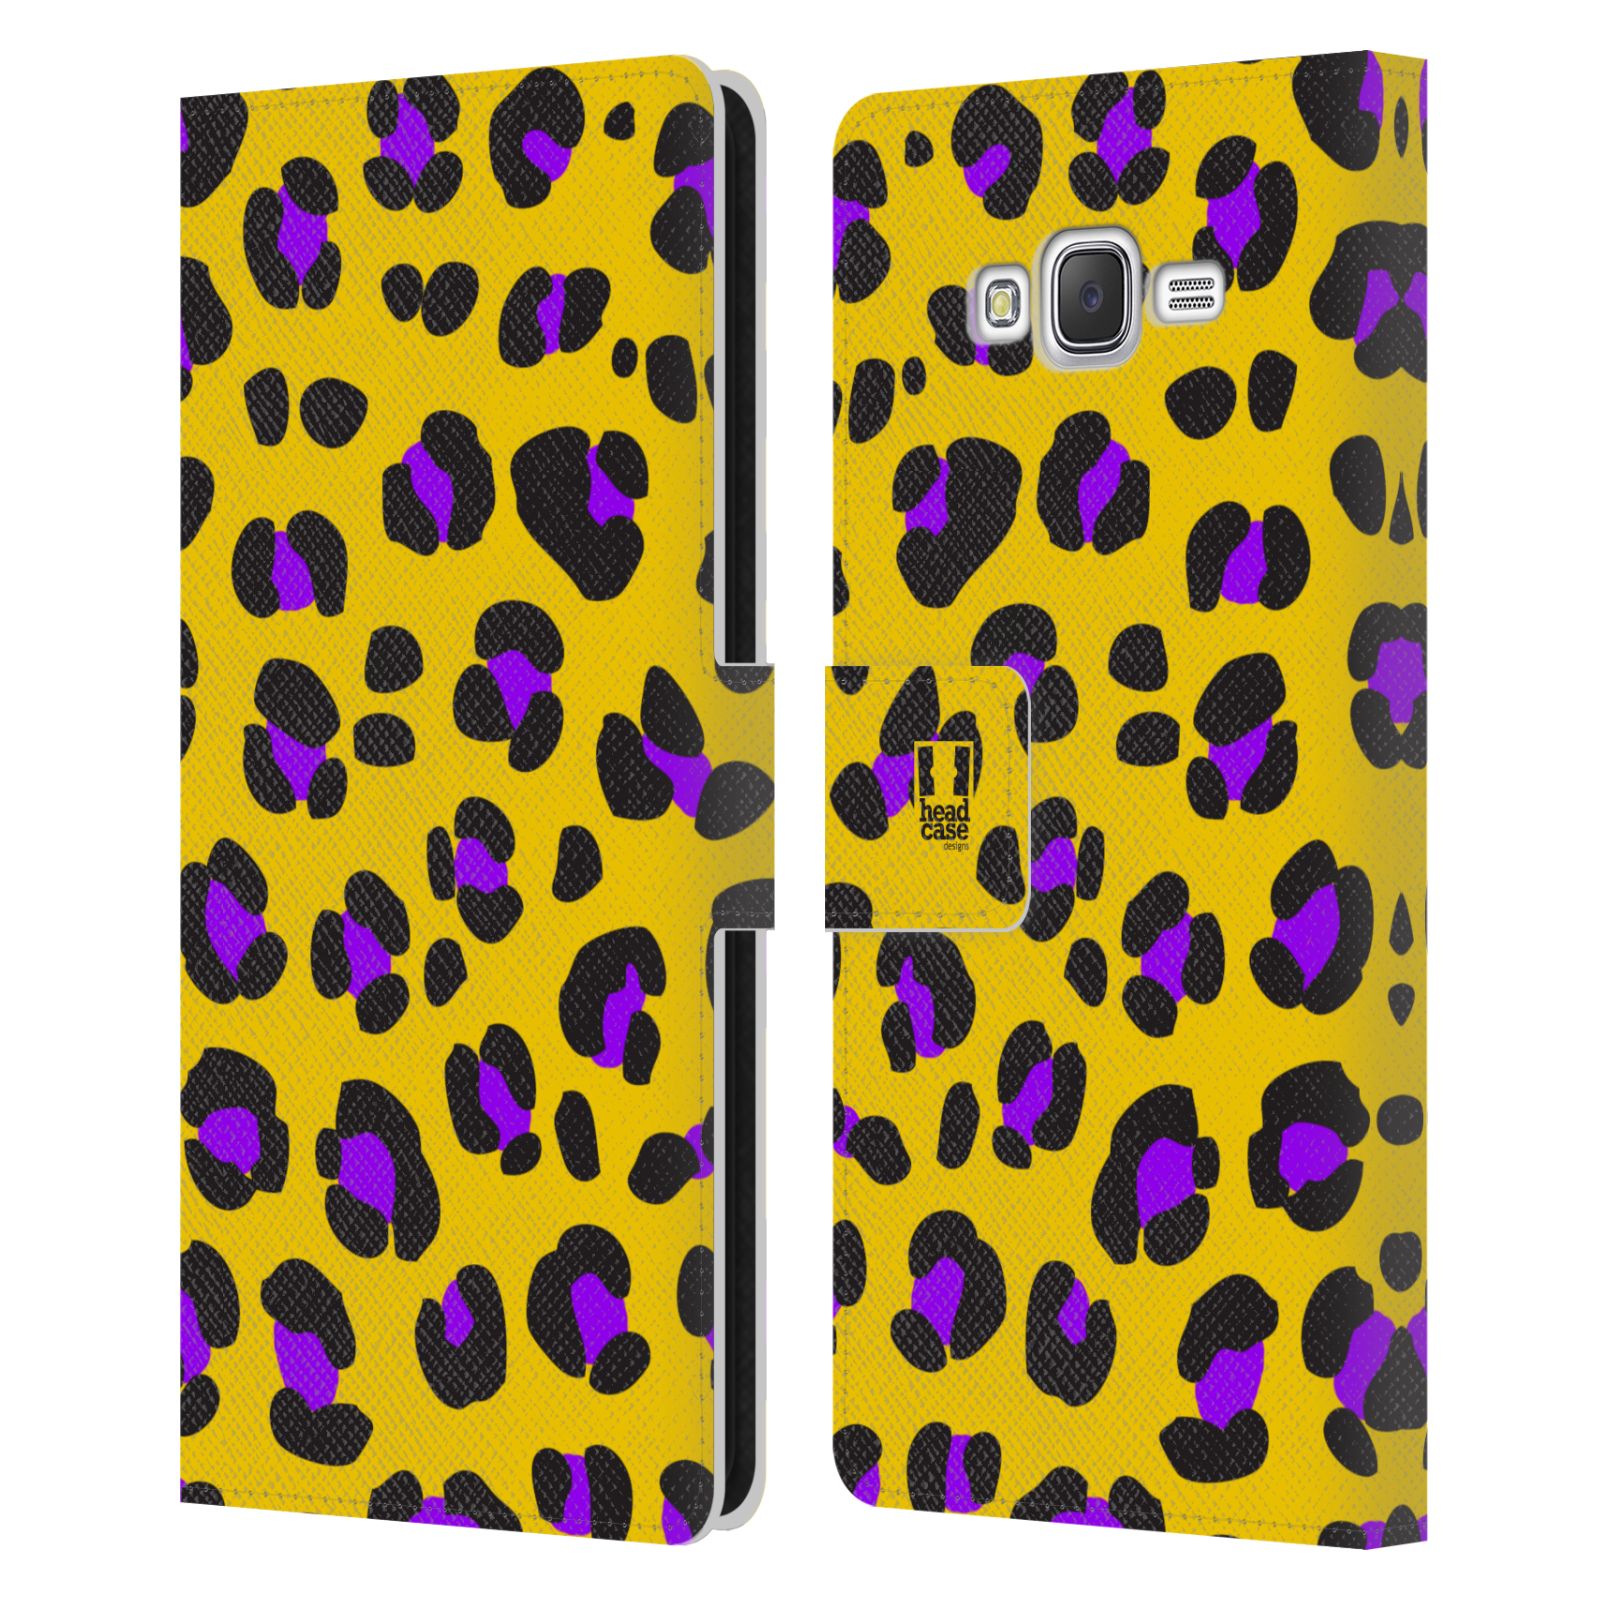 HEAD CASE Flipové pouzdro pro mobil Samsung Galaxy J7, J700 Zvířecí barevné vzory žlutý leopard fialové skvrny